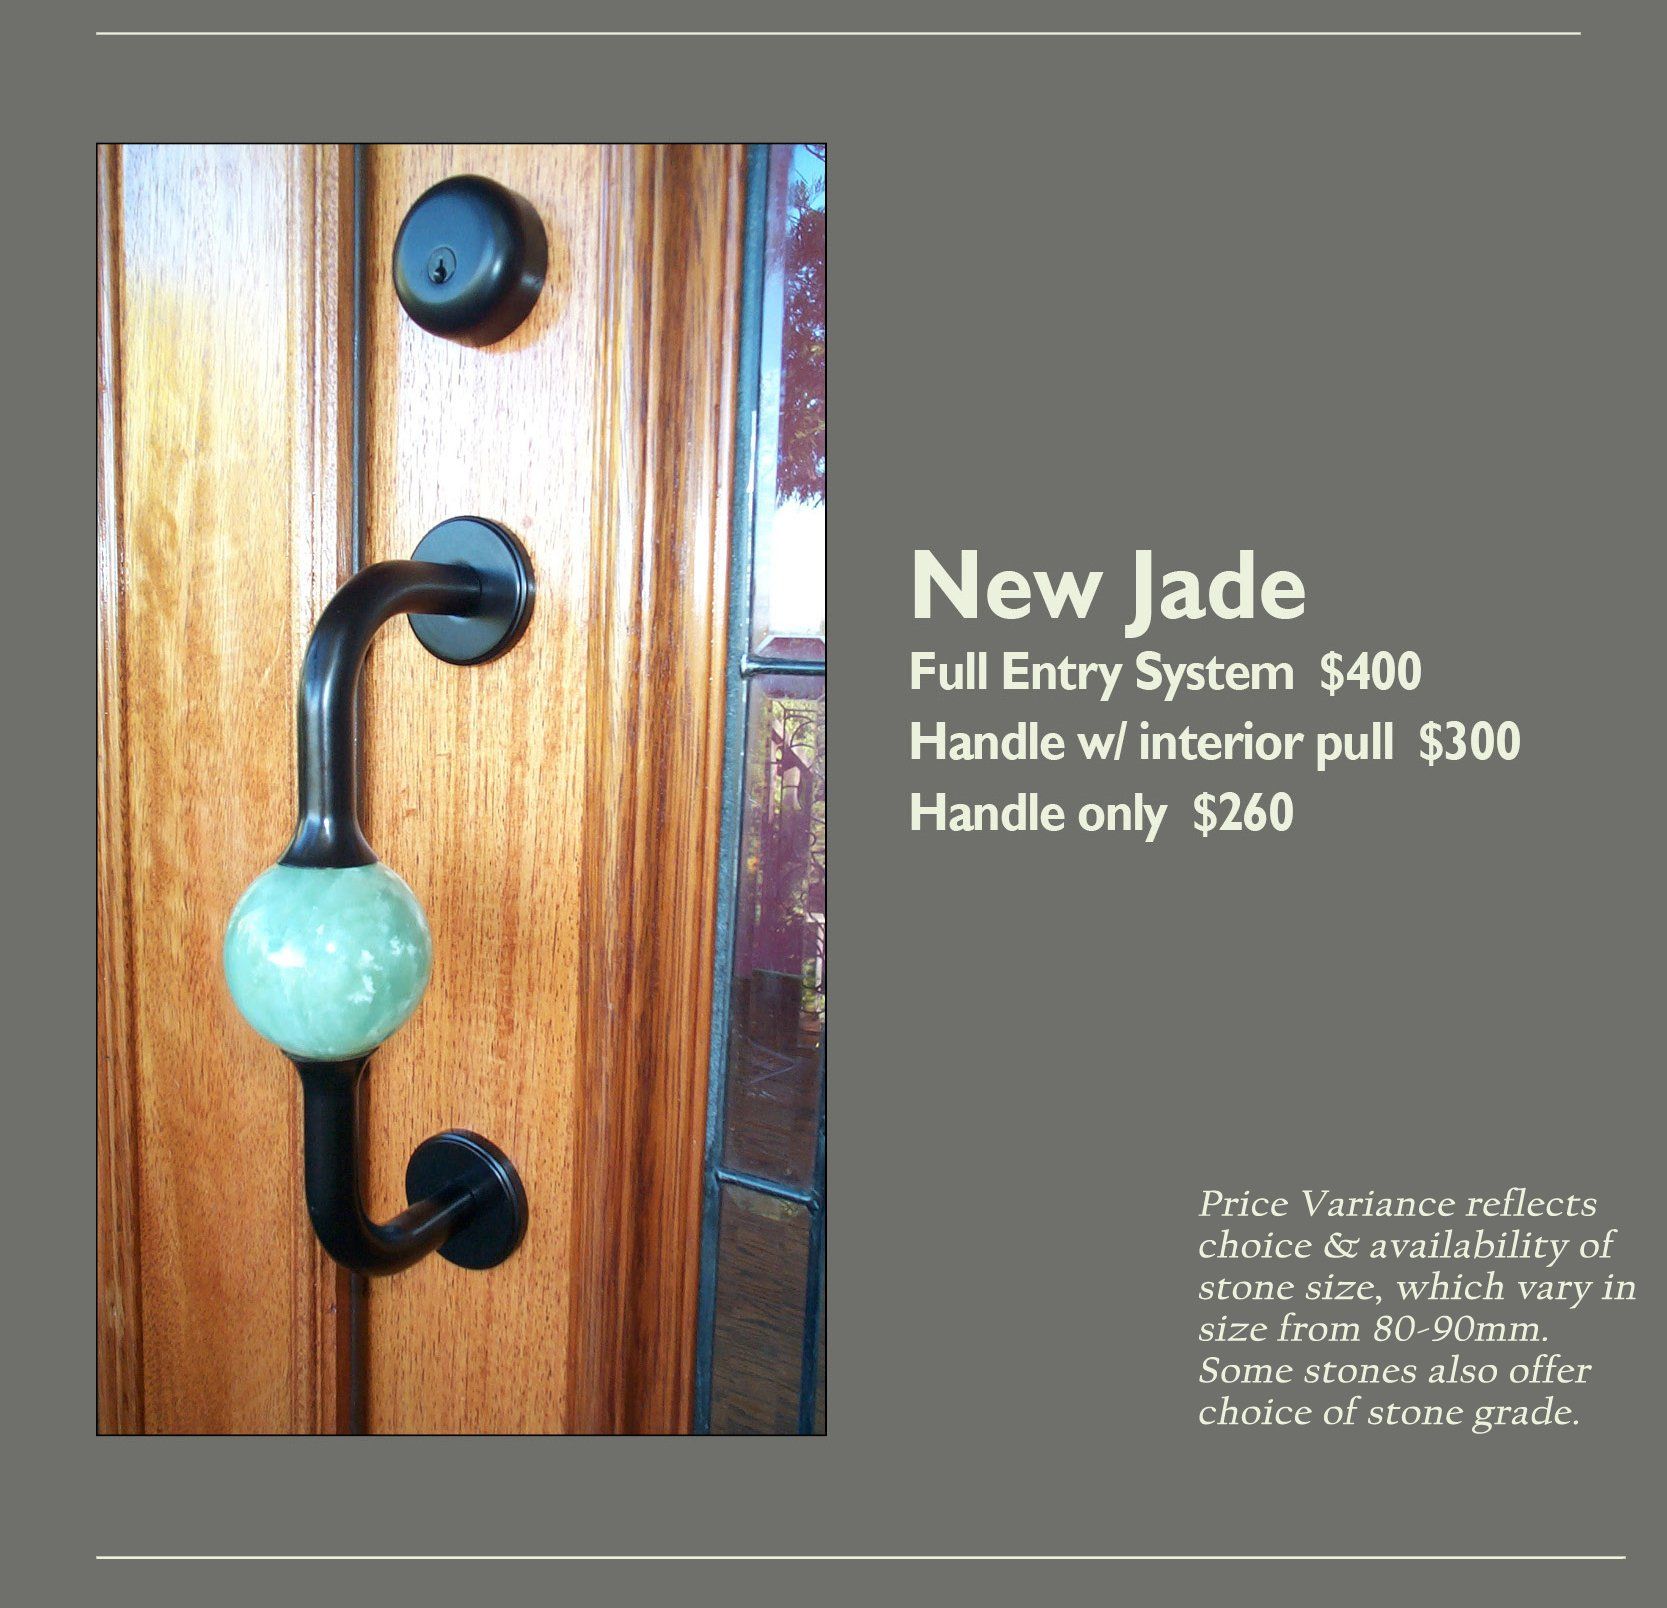 New Jade Entry Knob Options